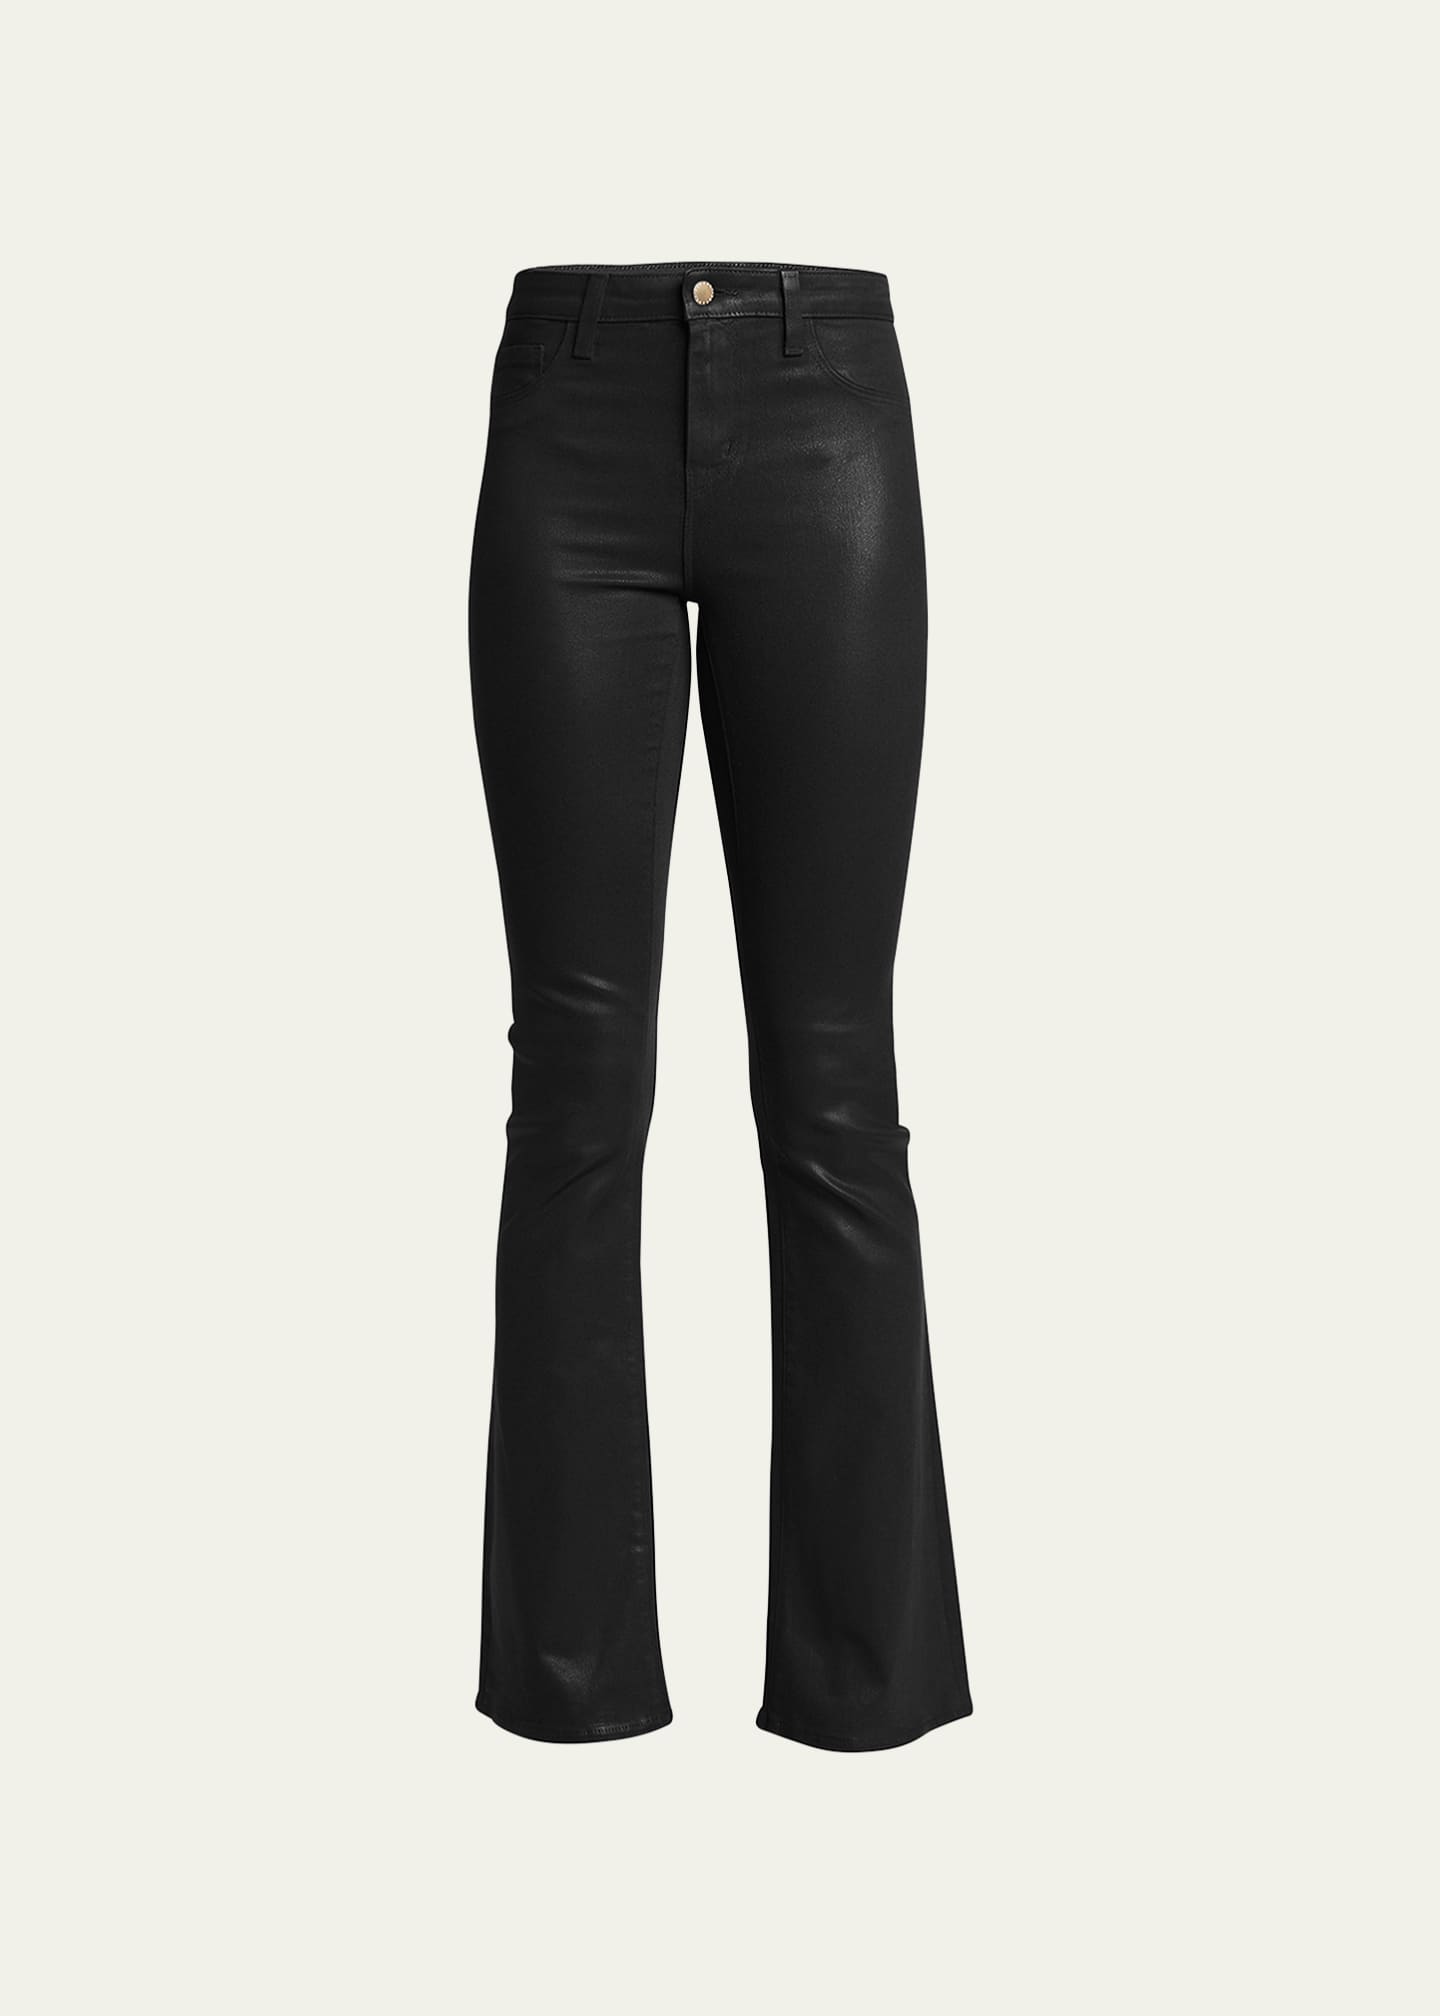 L'Agence Selma High-Rise Sleek Baby Boot Jeans - Bergdorf Goodman